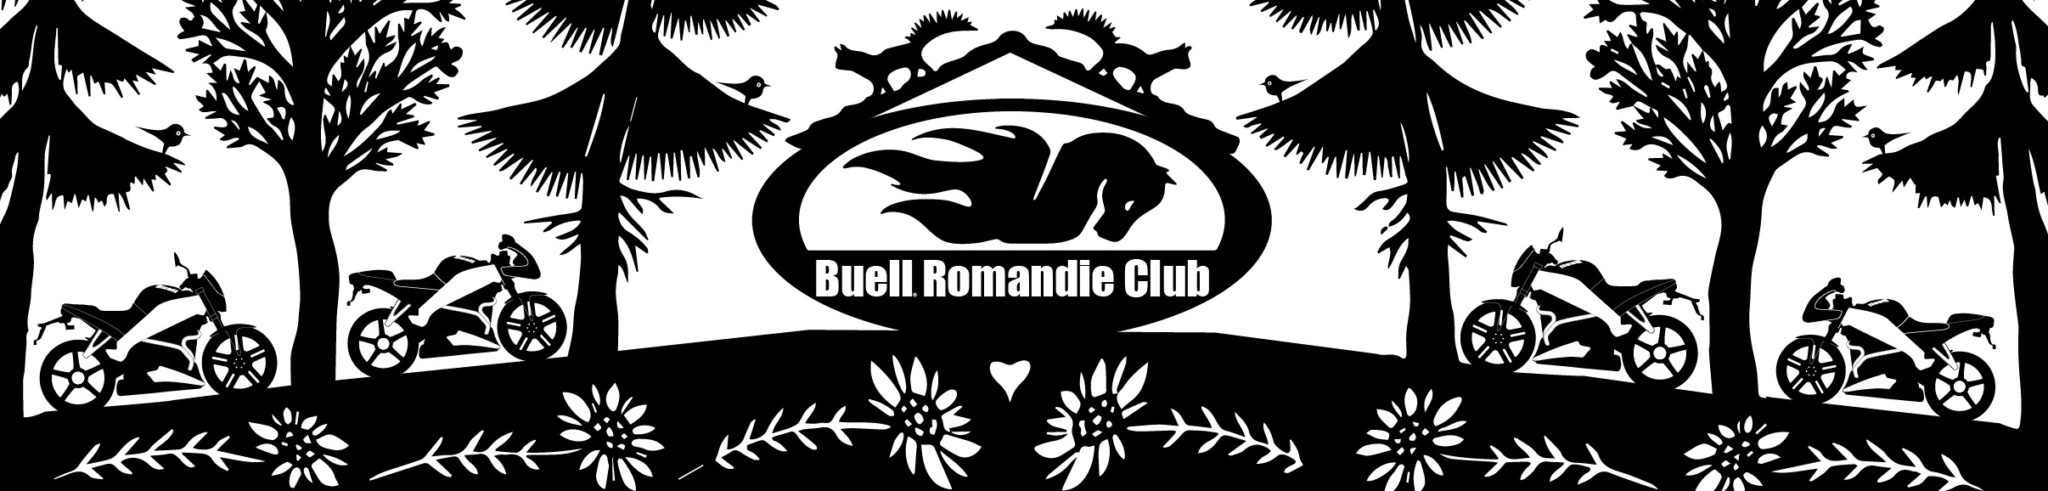 Buell Romandie Club